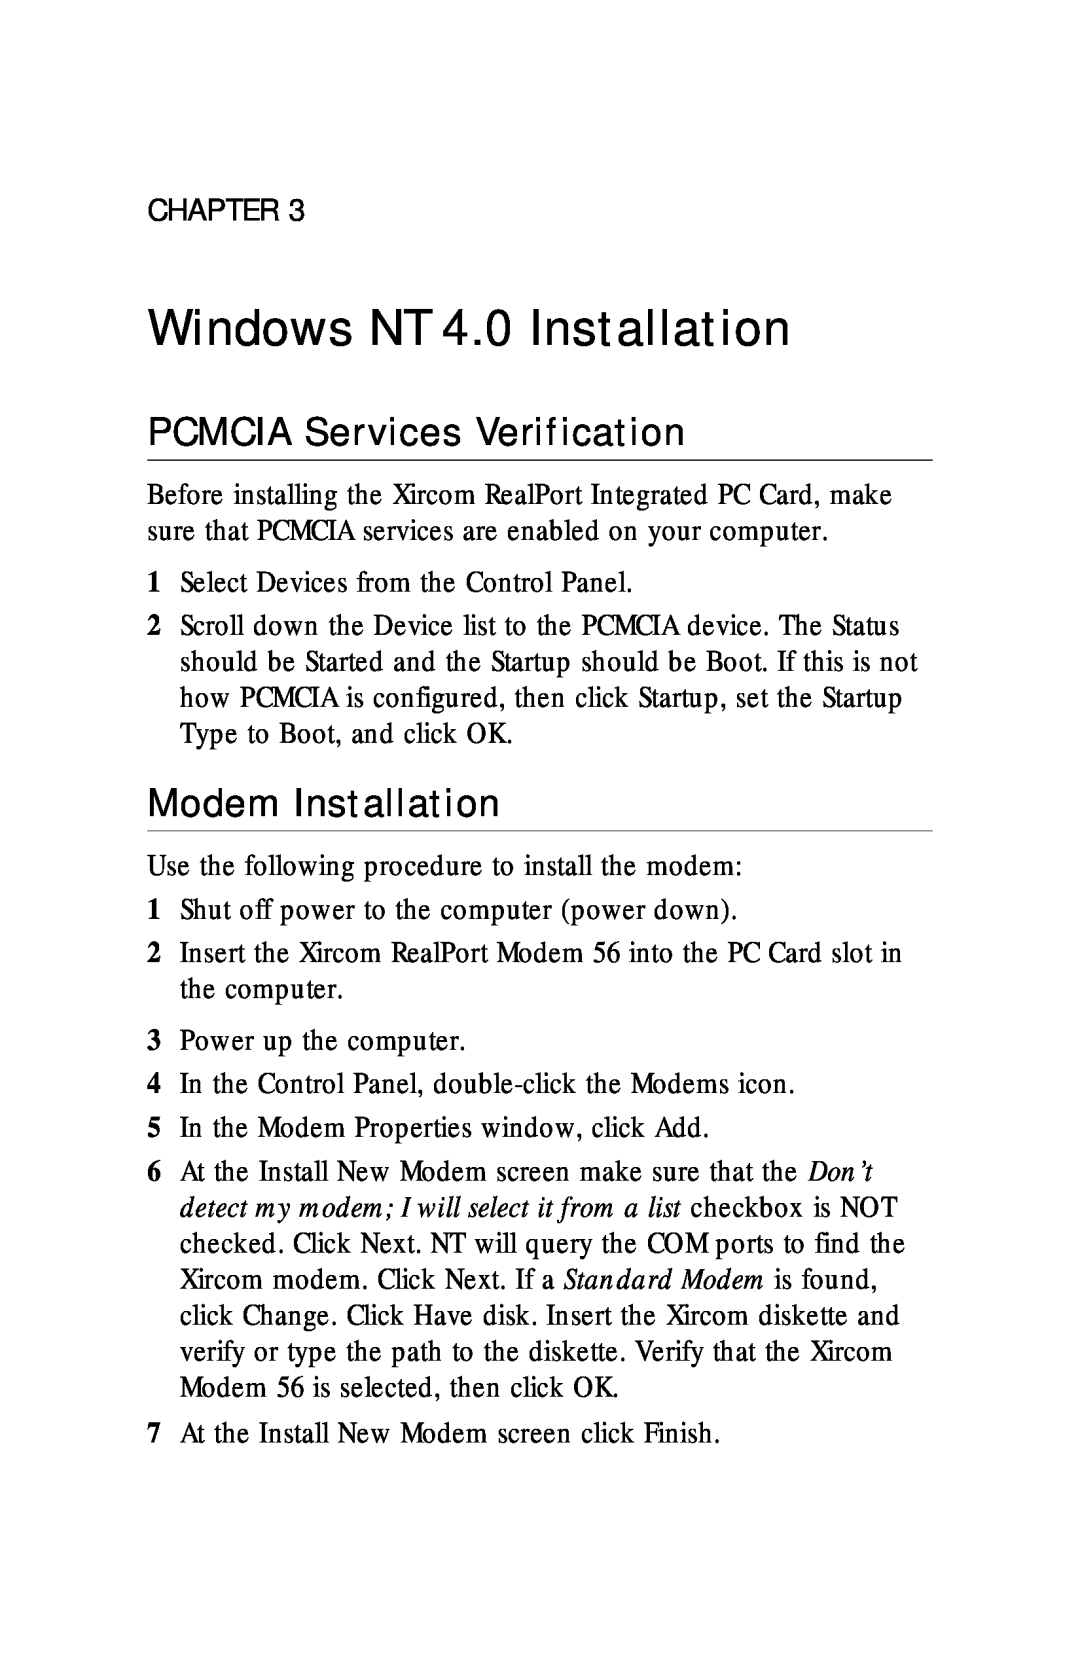 Xircom RM56V1 manual Windows NT 4.0 Installation, PCMCIA Services Verification, Modem Installation 